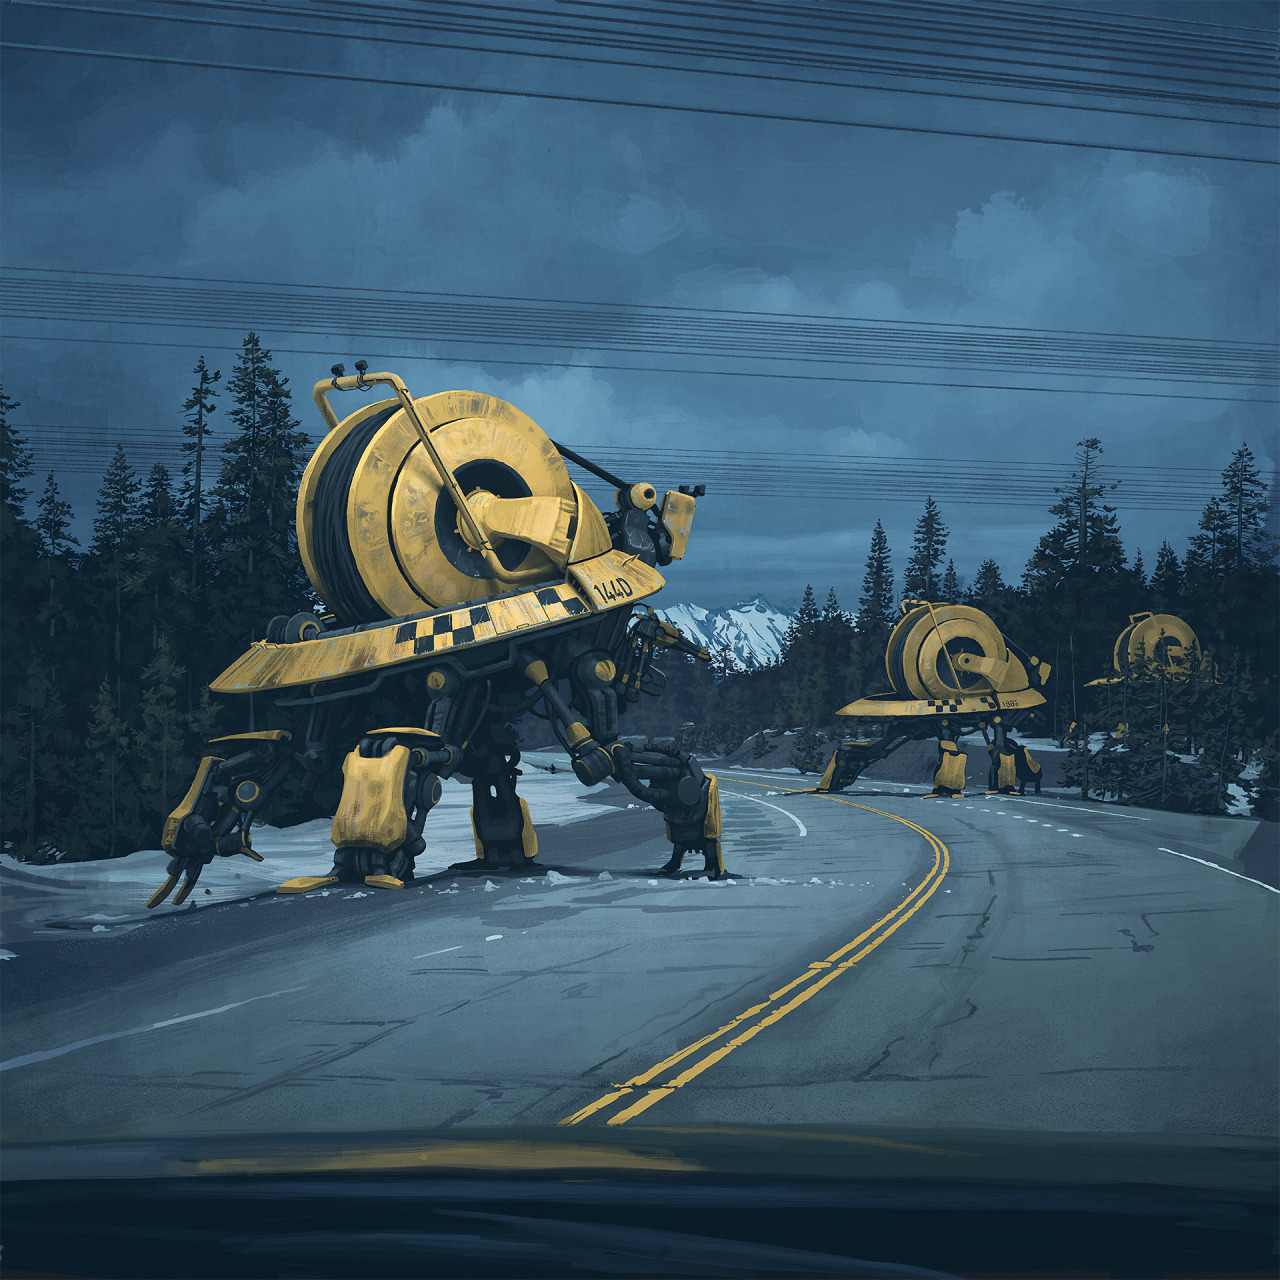 Fine Art: Latest Sci-Fi Art From Simon Stålenhag Captures The Strangeness Of The Road Ahead